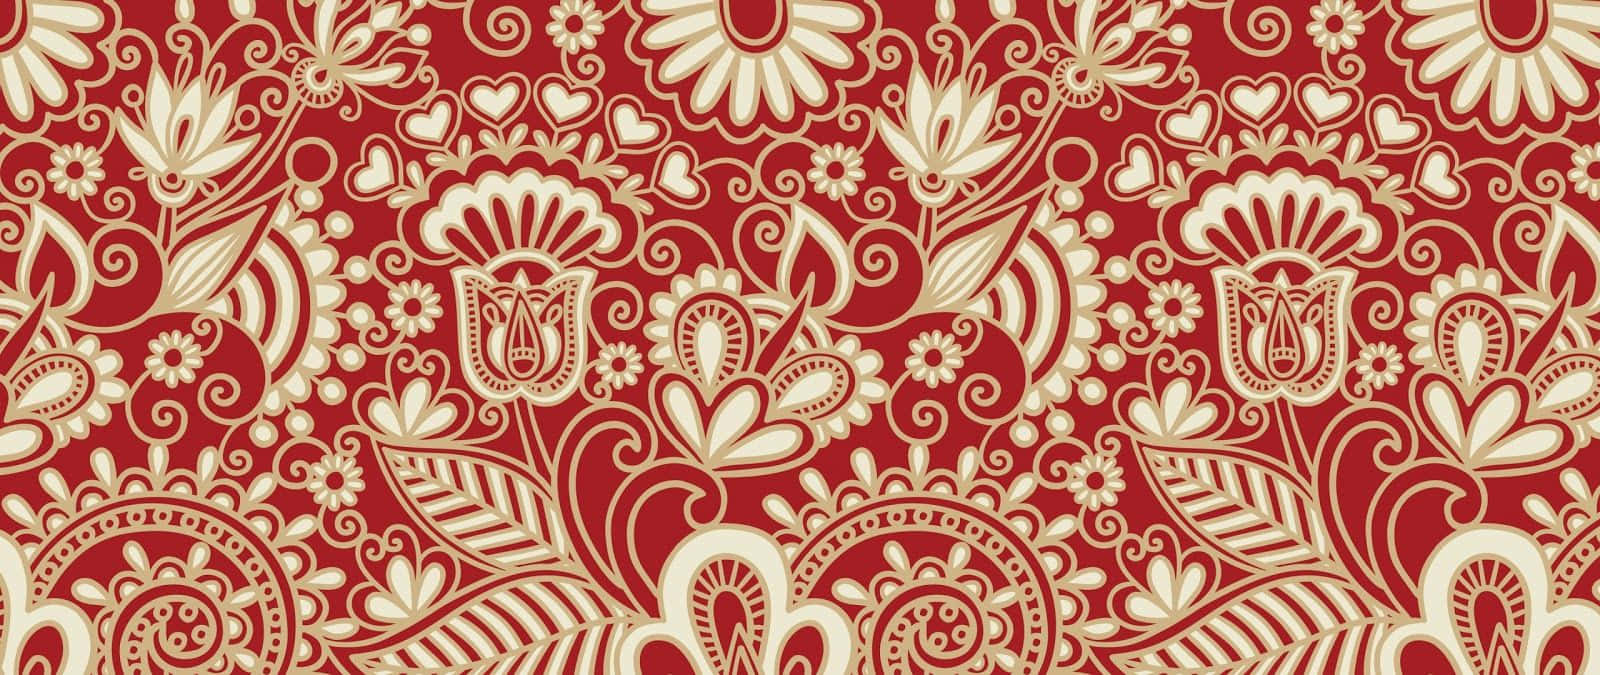 Mixture Of Patterns Red Ultra Wide Hd Wallpaper